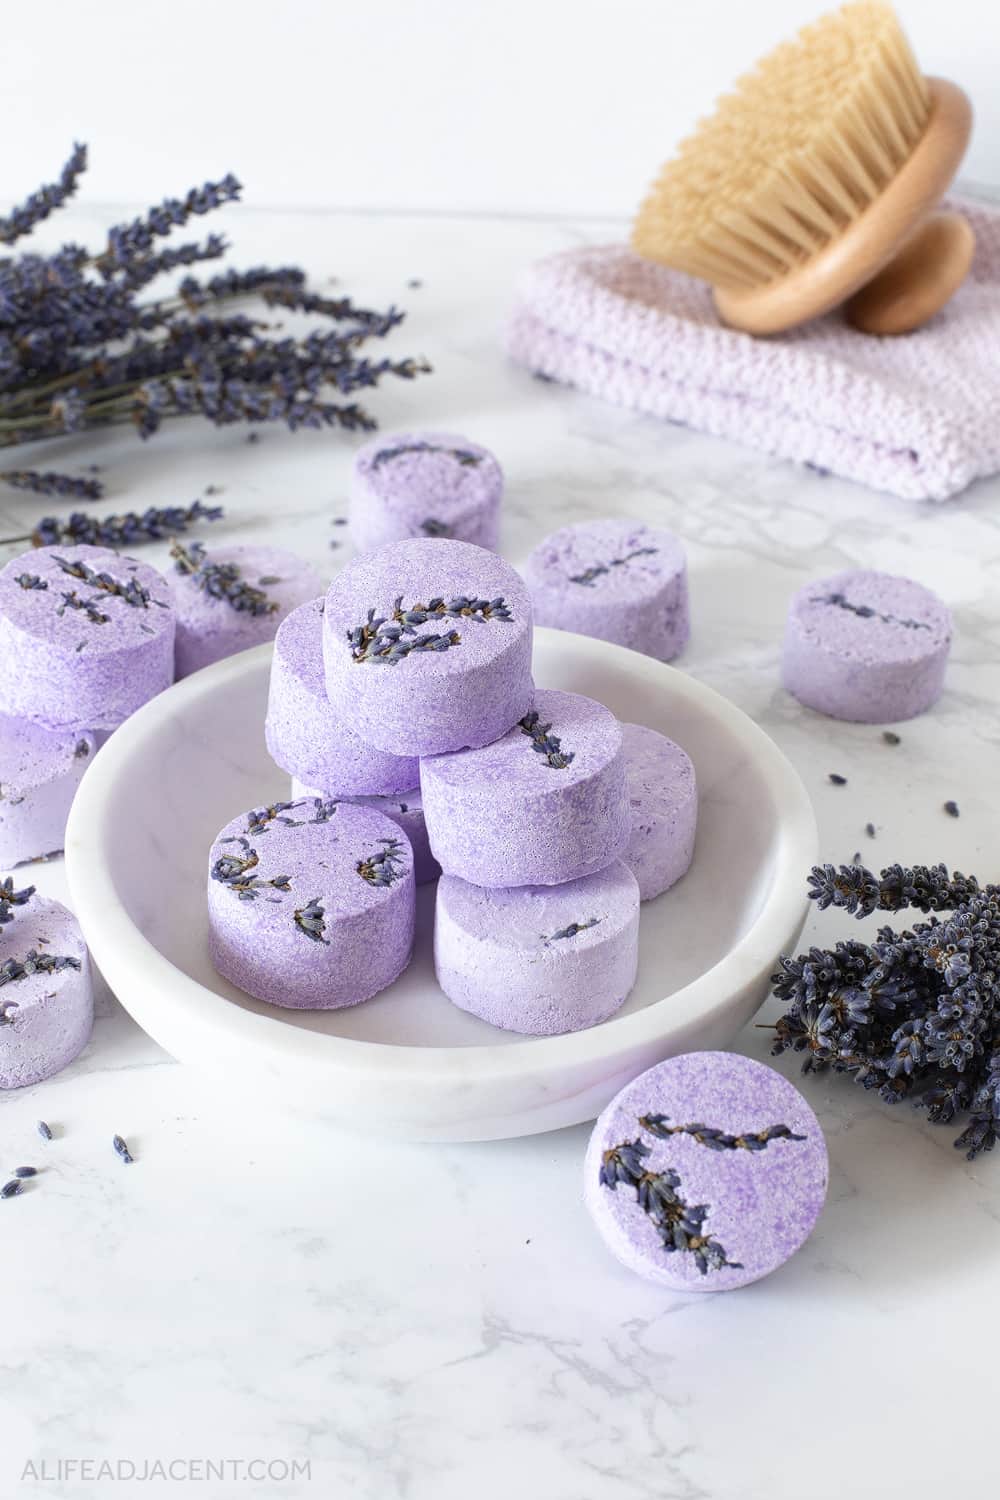 DIY Lavender Shower Steamers For Aromatherapy A Life Adjacent